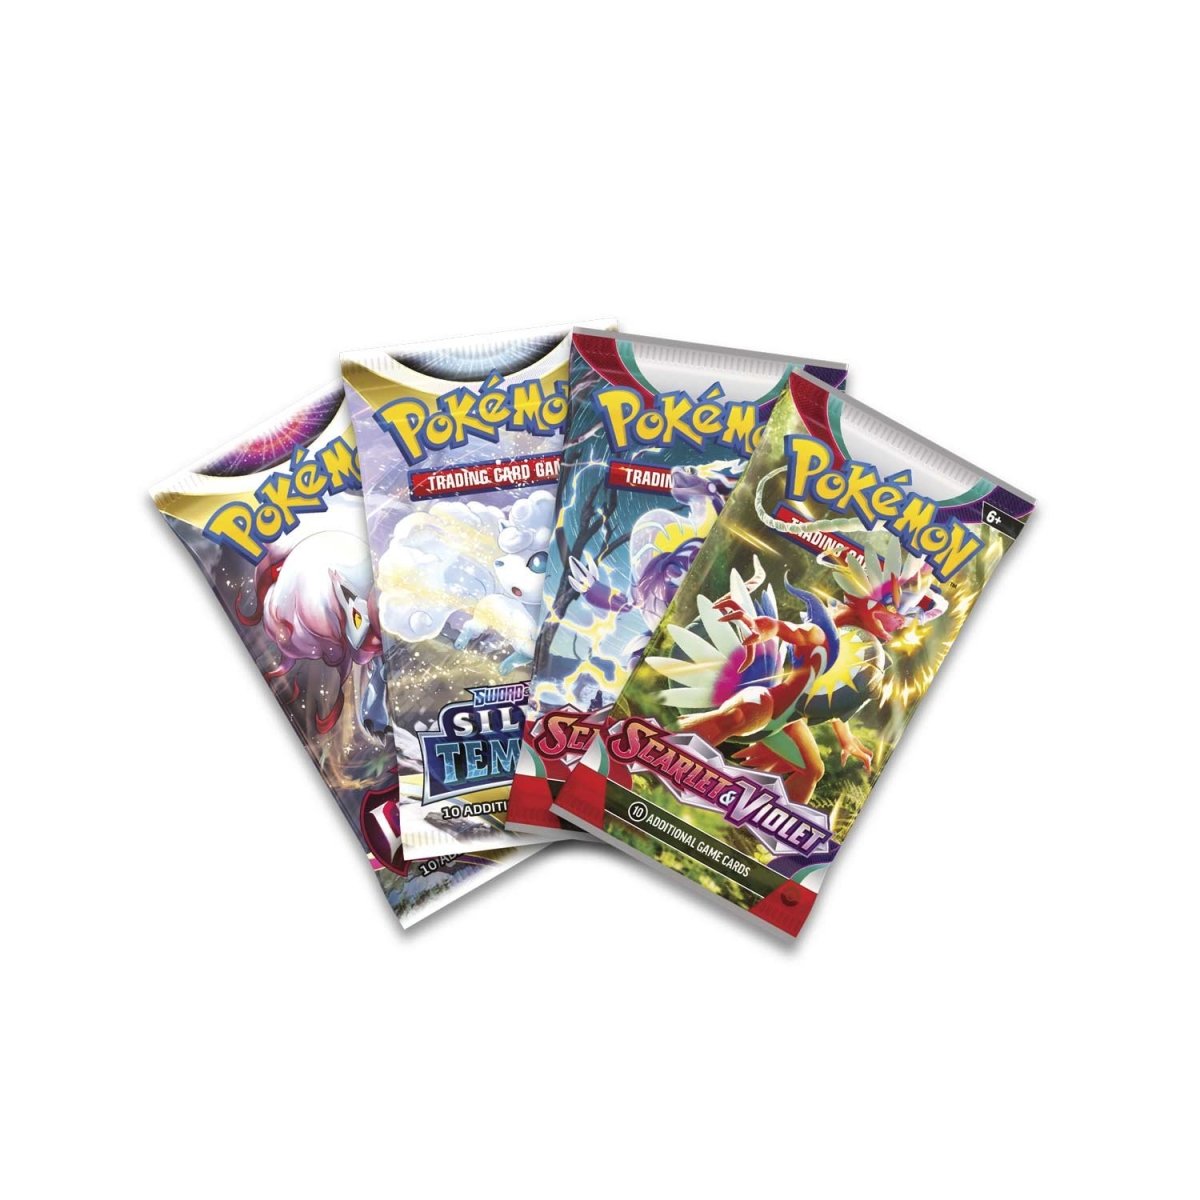 Pokémon TCG: Cyclizar ex Box-The Pokémon Company International-Ace Cards &amp; Collectibles